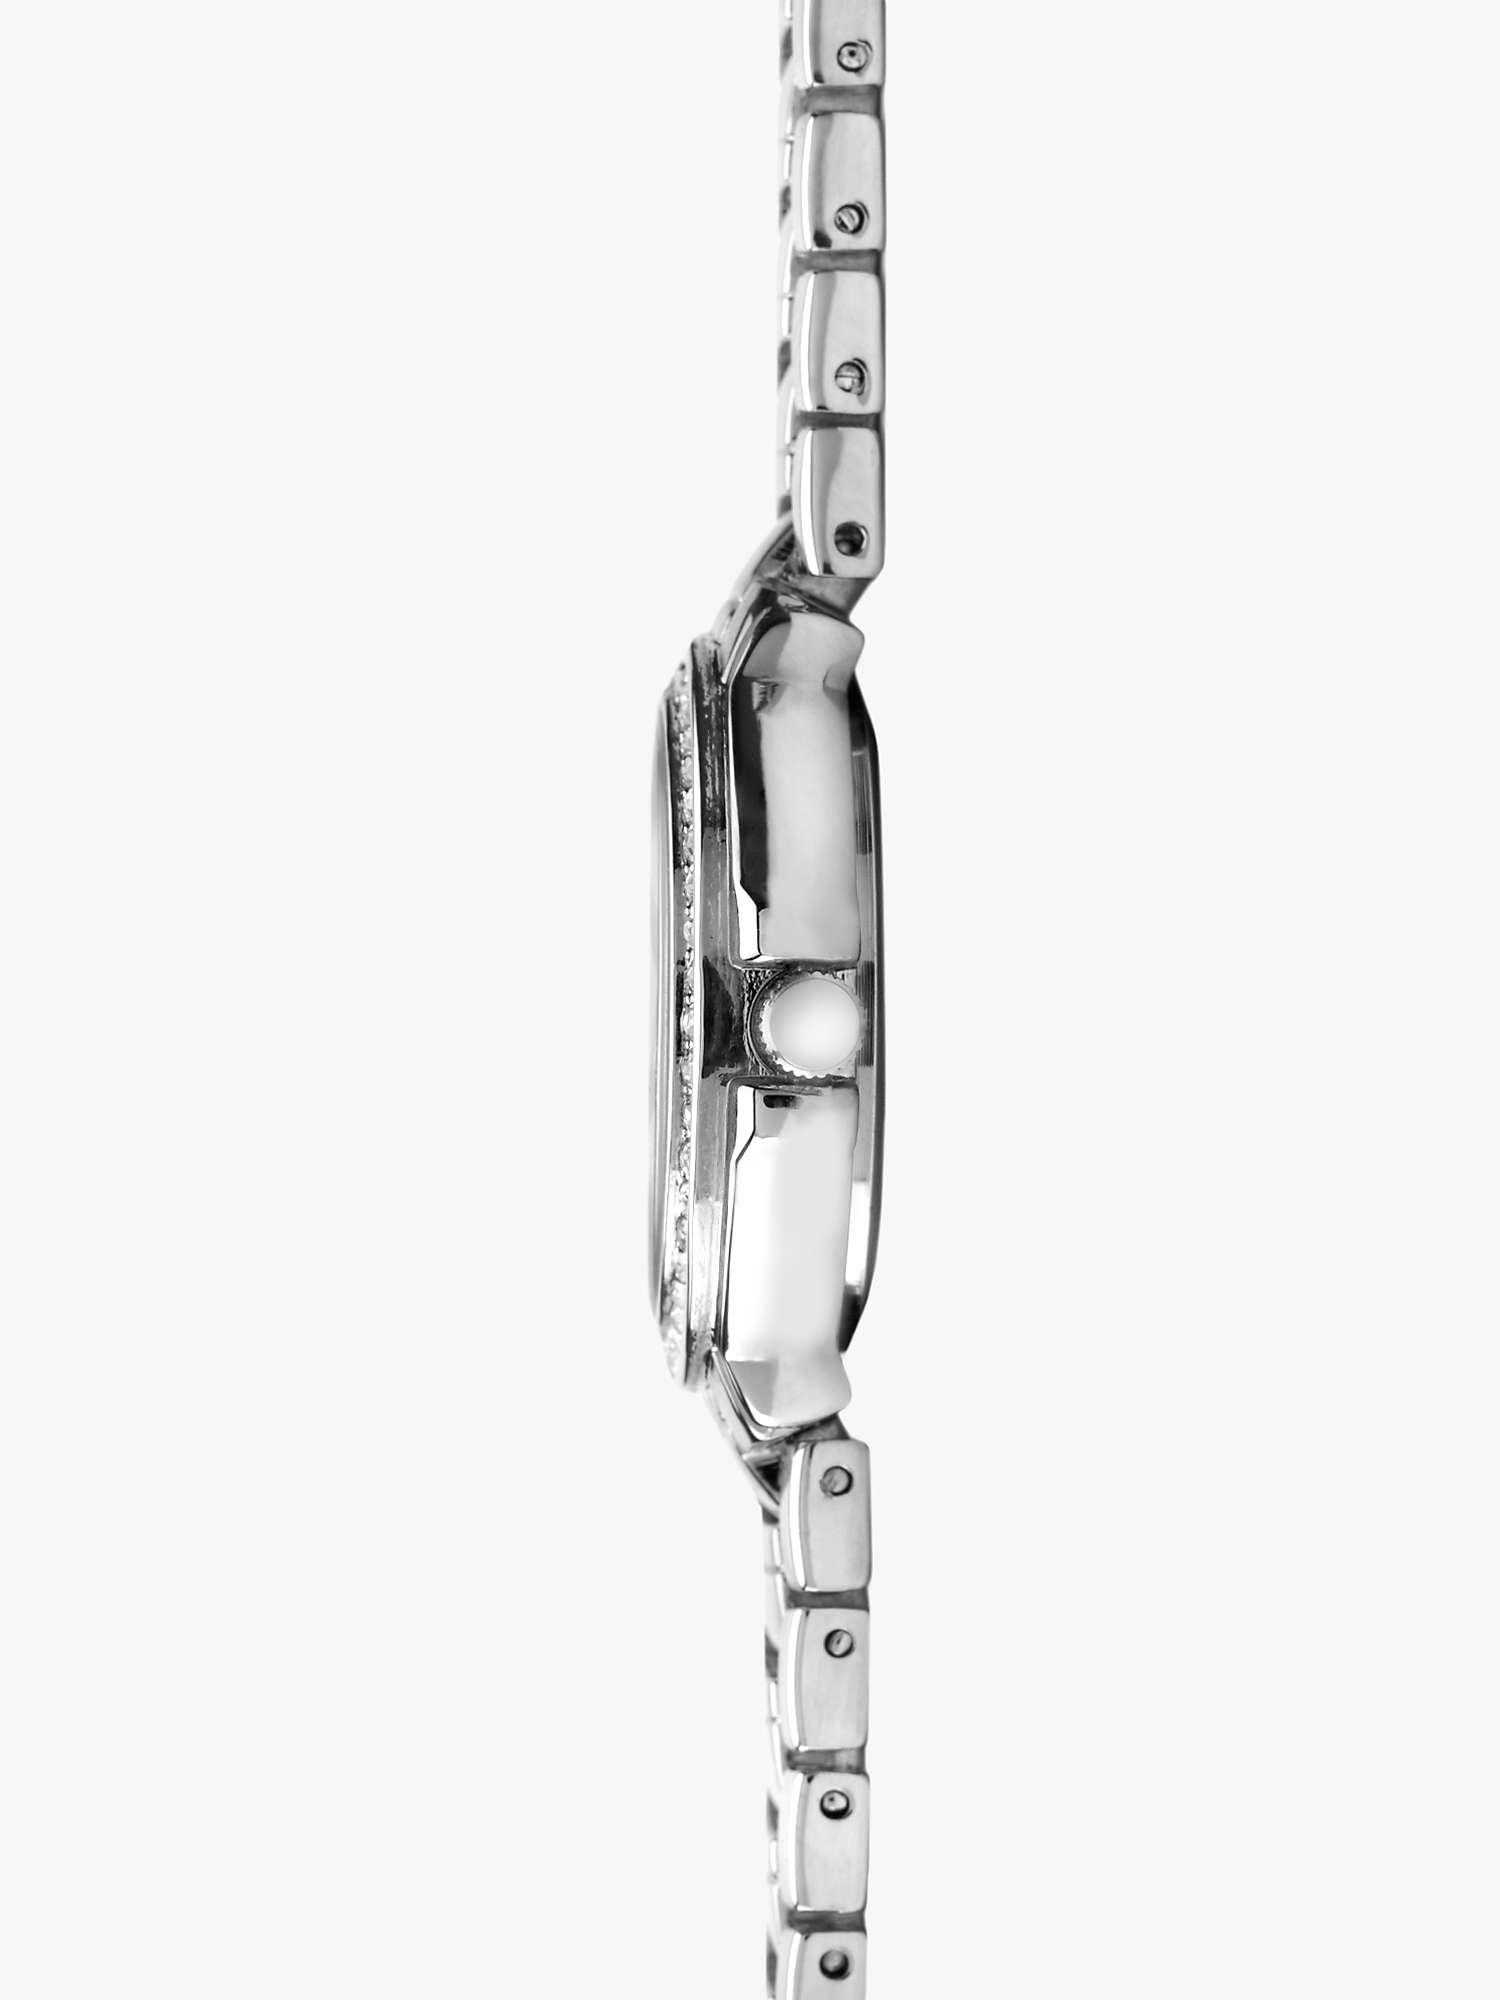 Buy Sekonda 2841 Women's Crystal Bracelet Strap Watch, Silver/Mother of Pearl Online at johnlewis.com